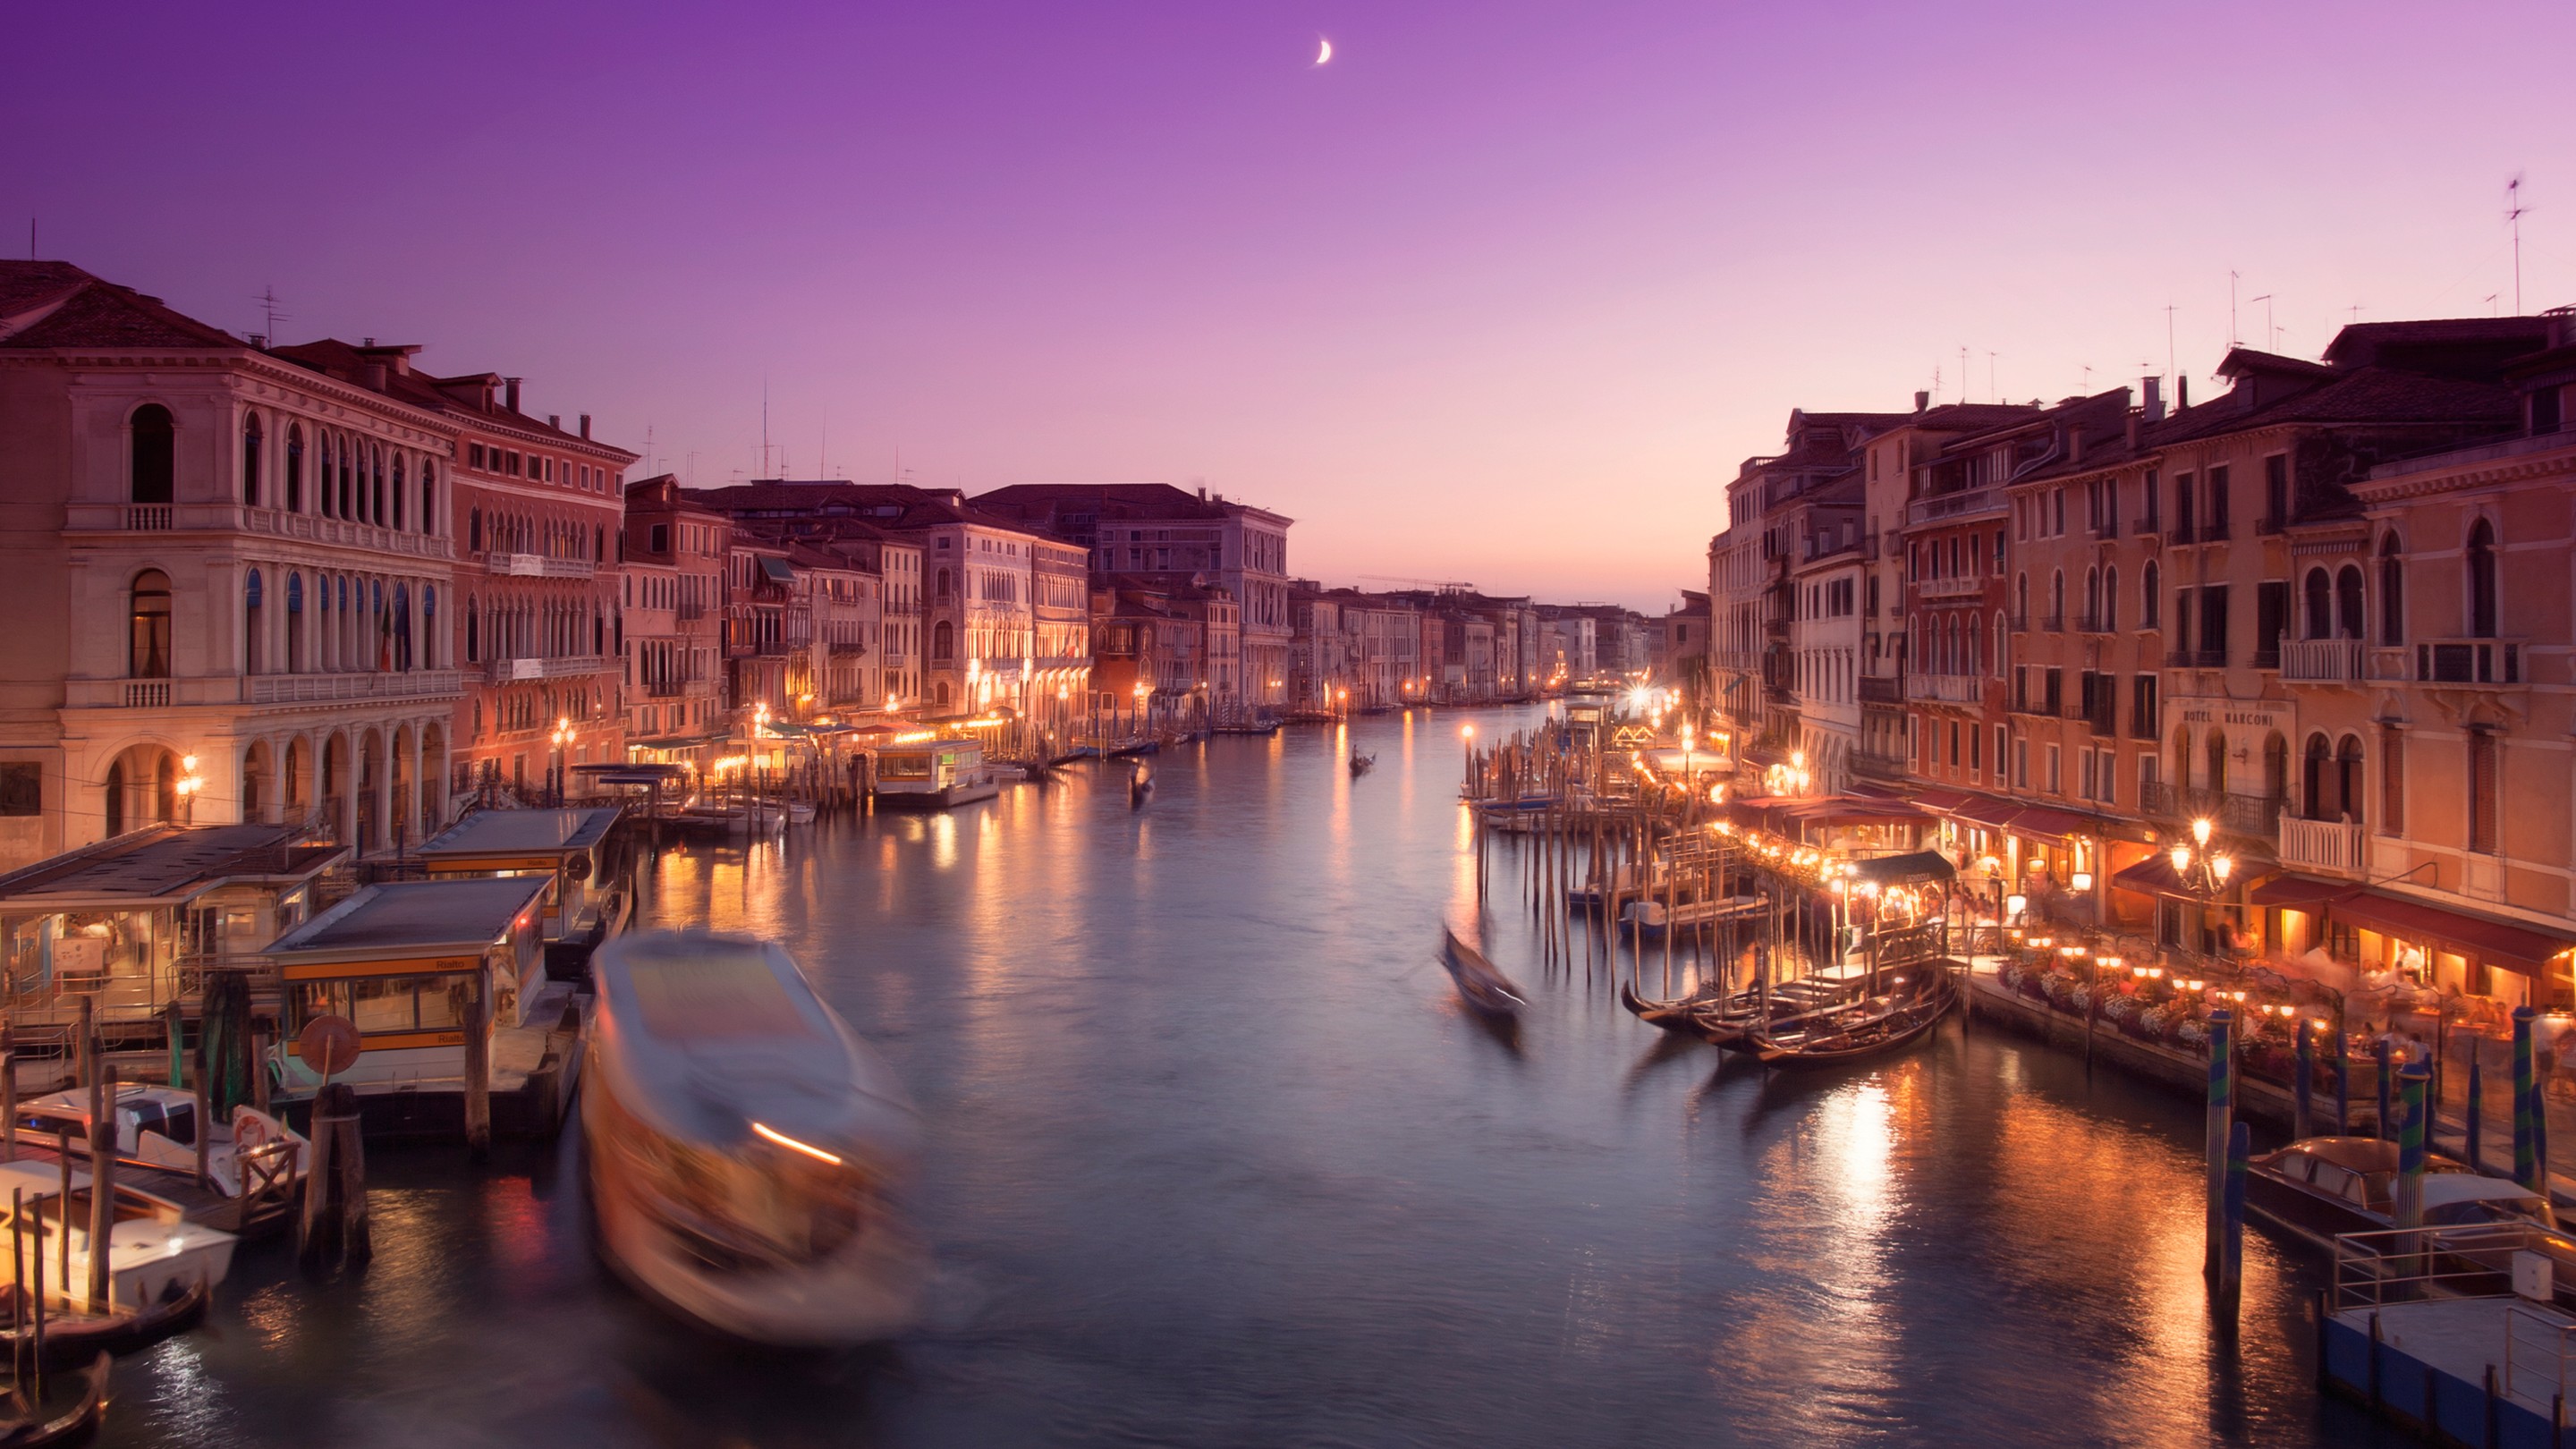 River Venice Night City Lights Gondolas 2880x1620